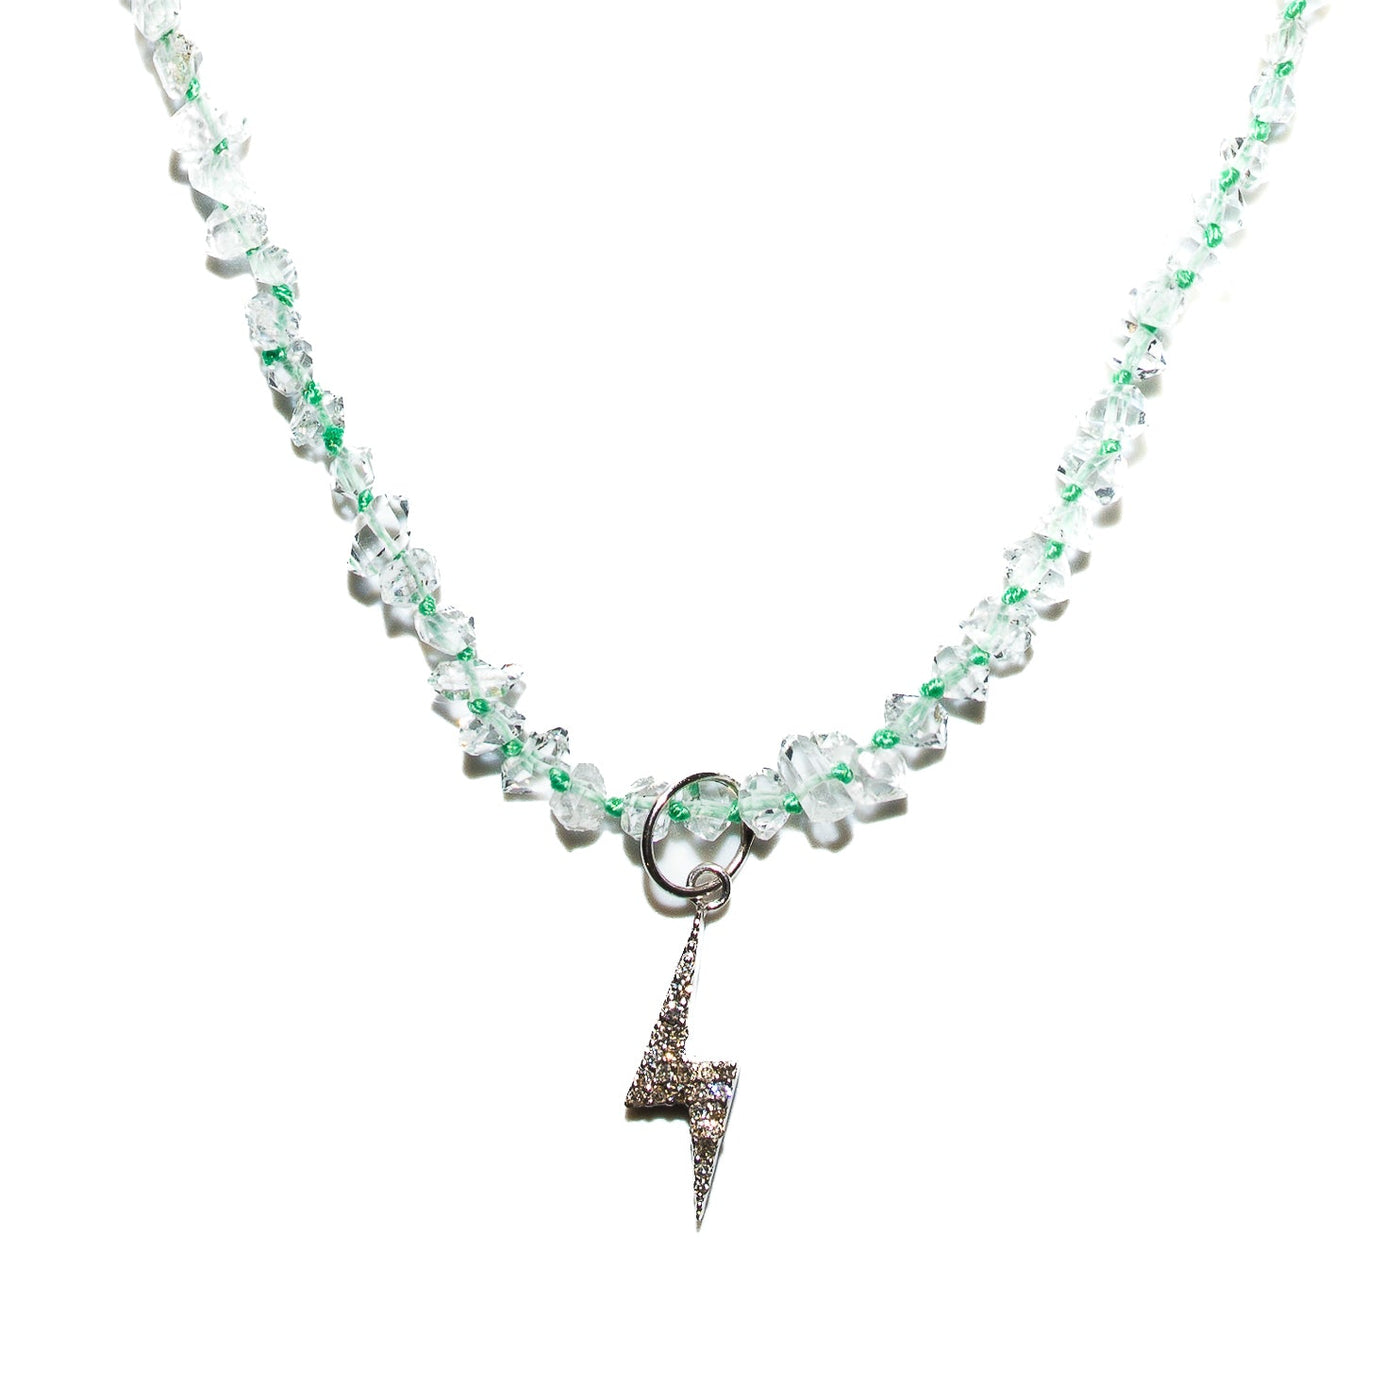 Hackamore Diamond Necklace with Teardrop Pendant